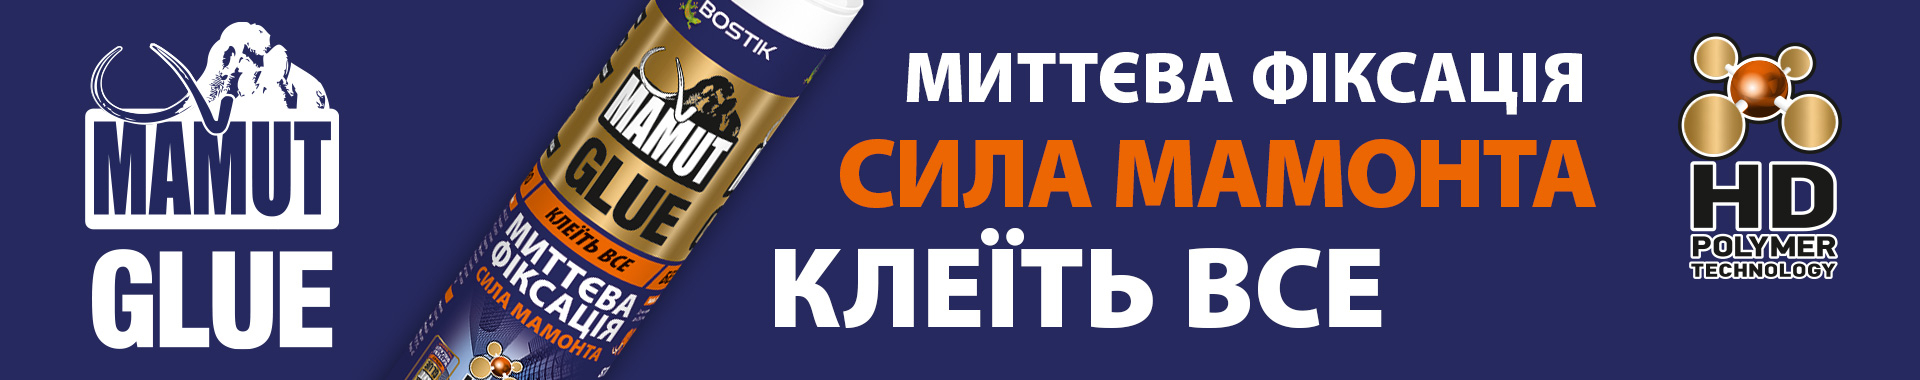 Bostik DIY Ukraine Mamut glue banner image